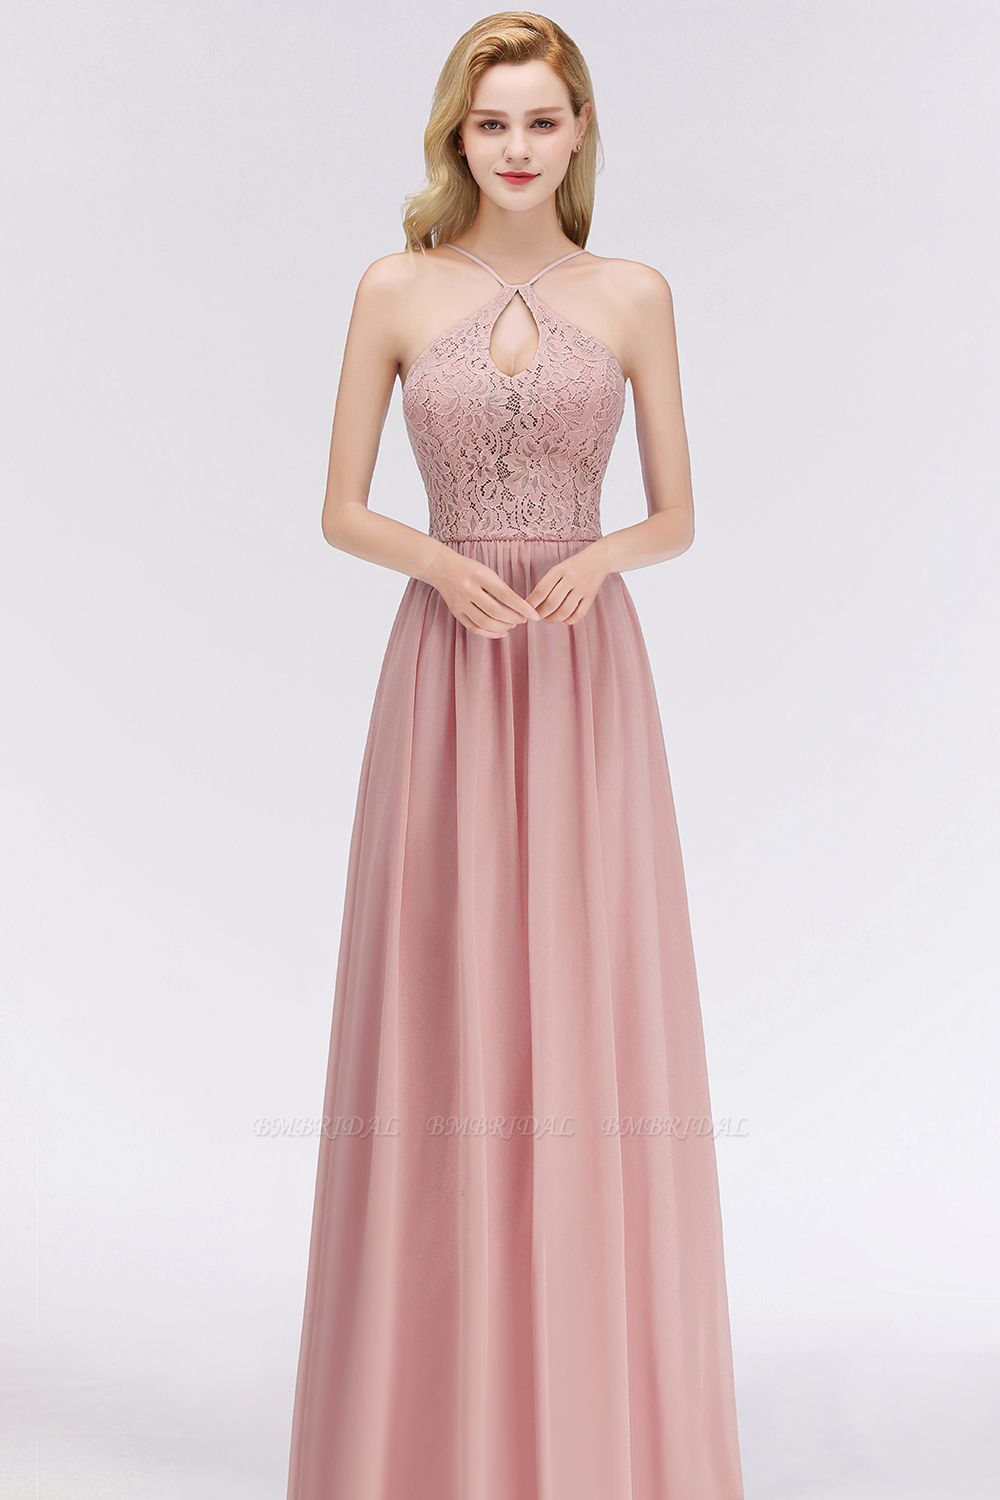 BMbridal Elegant Lace Keyhole Halter Dusty Rose Chiffon Bridesmaid Dress Affordable